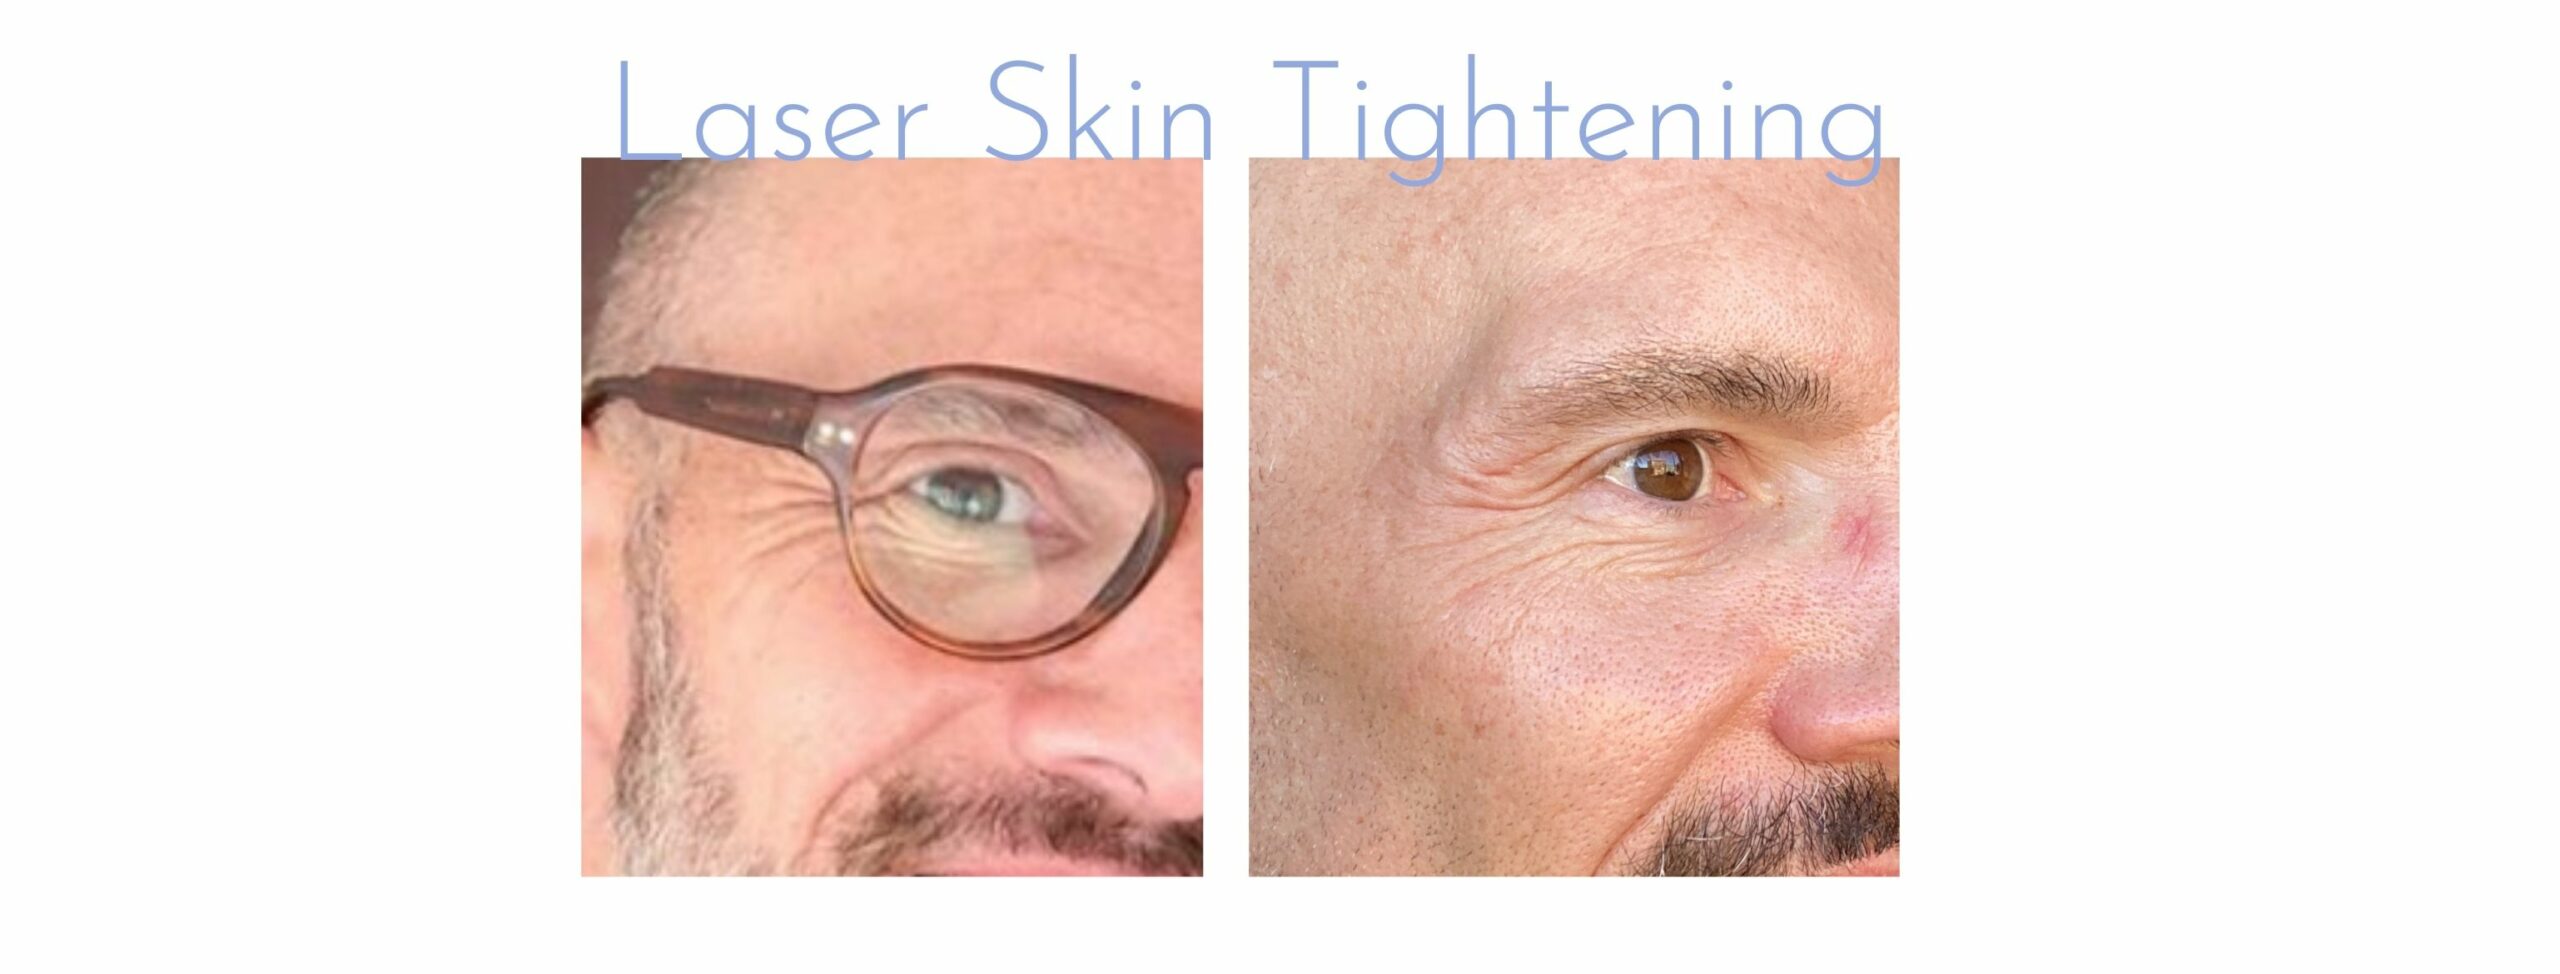 laser skin tightening